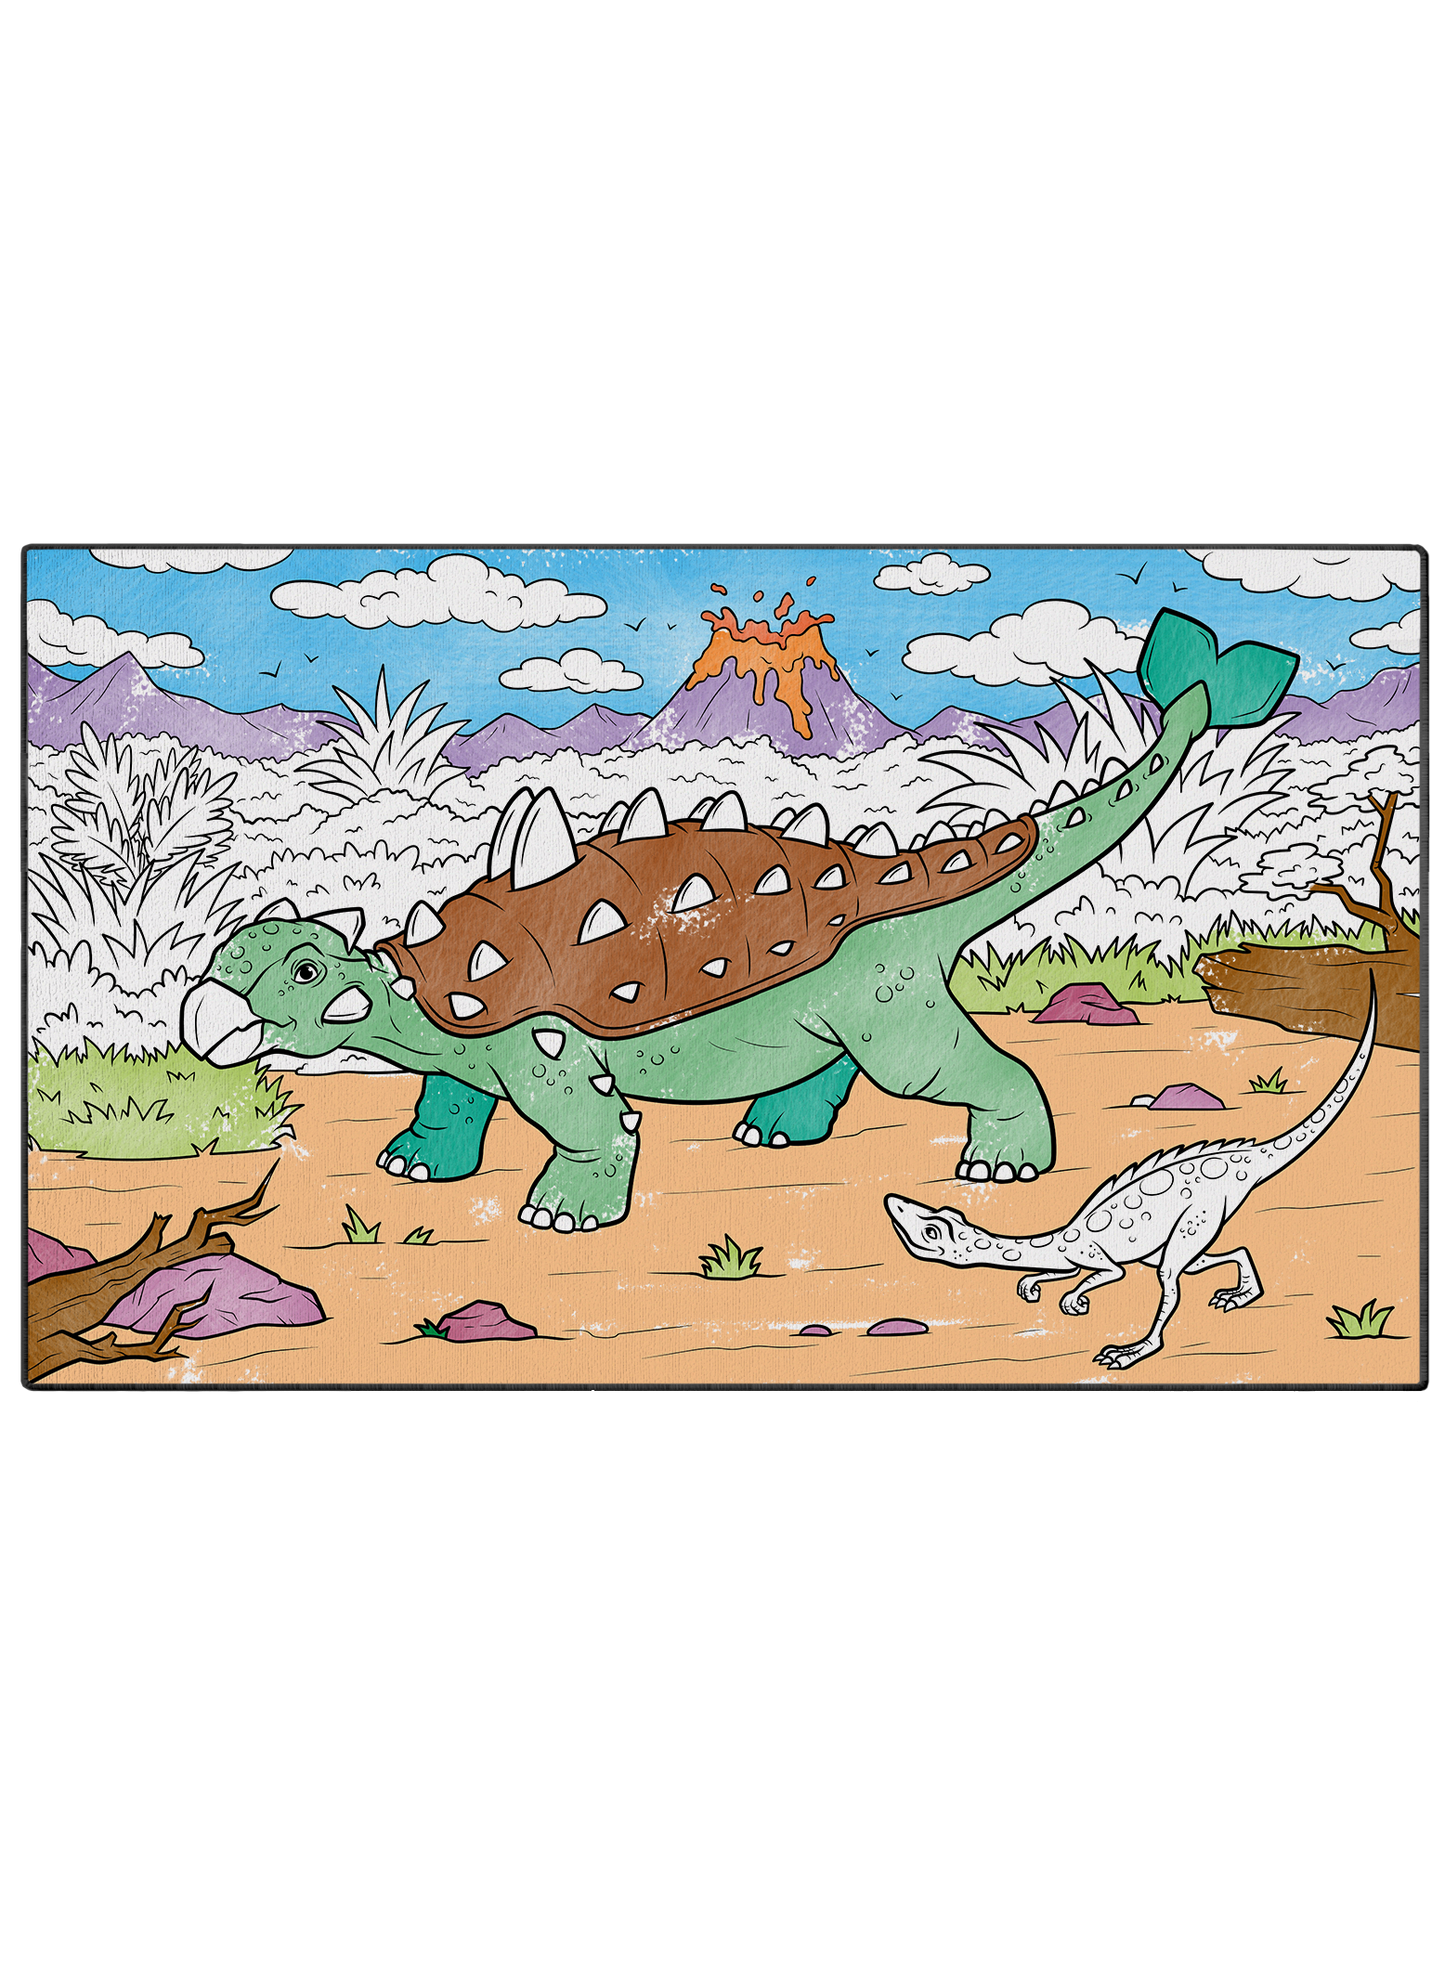 Coloring Mat "Walk with Ankylosaurus"